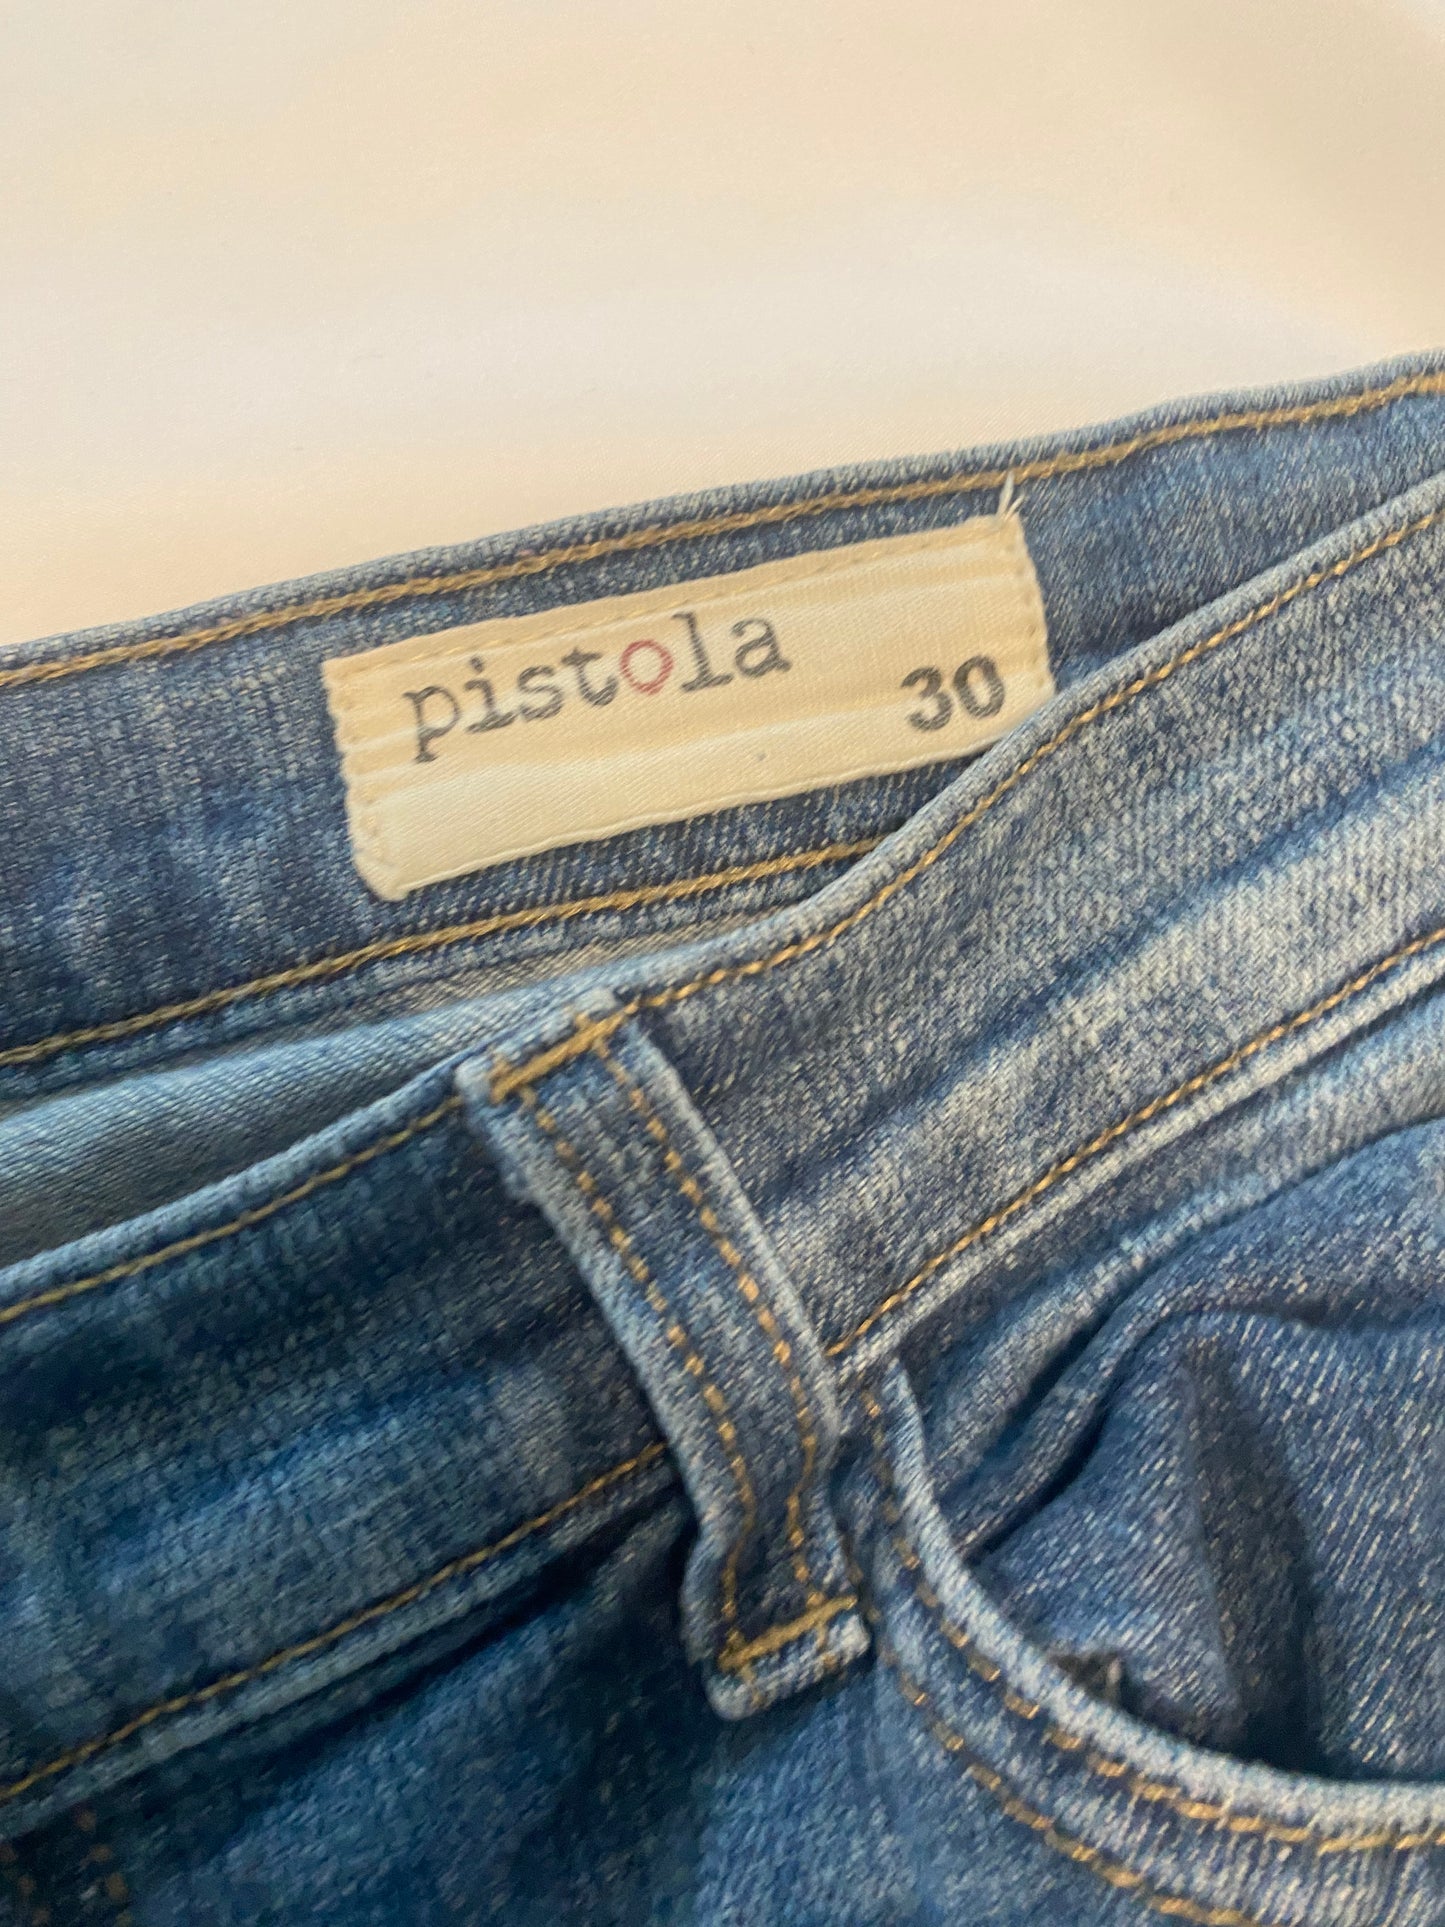 Pistola women's size 30 jeans, EUC